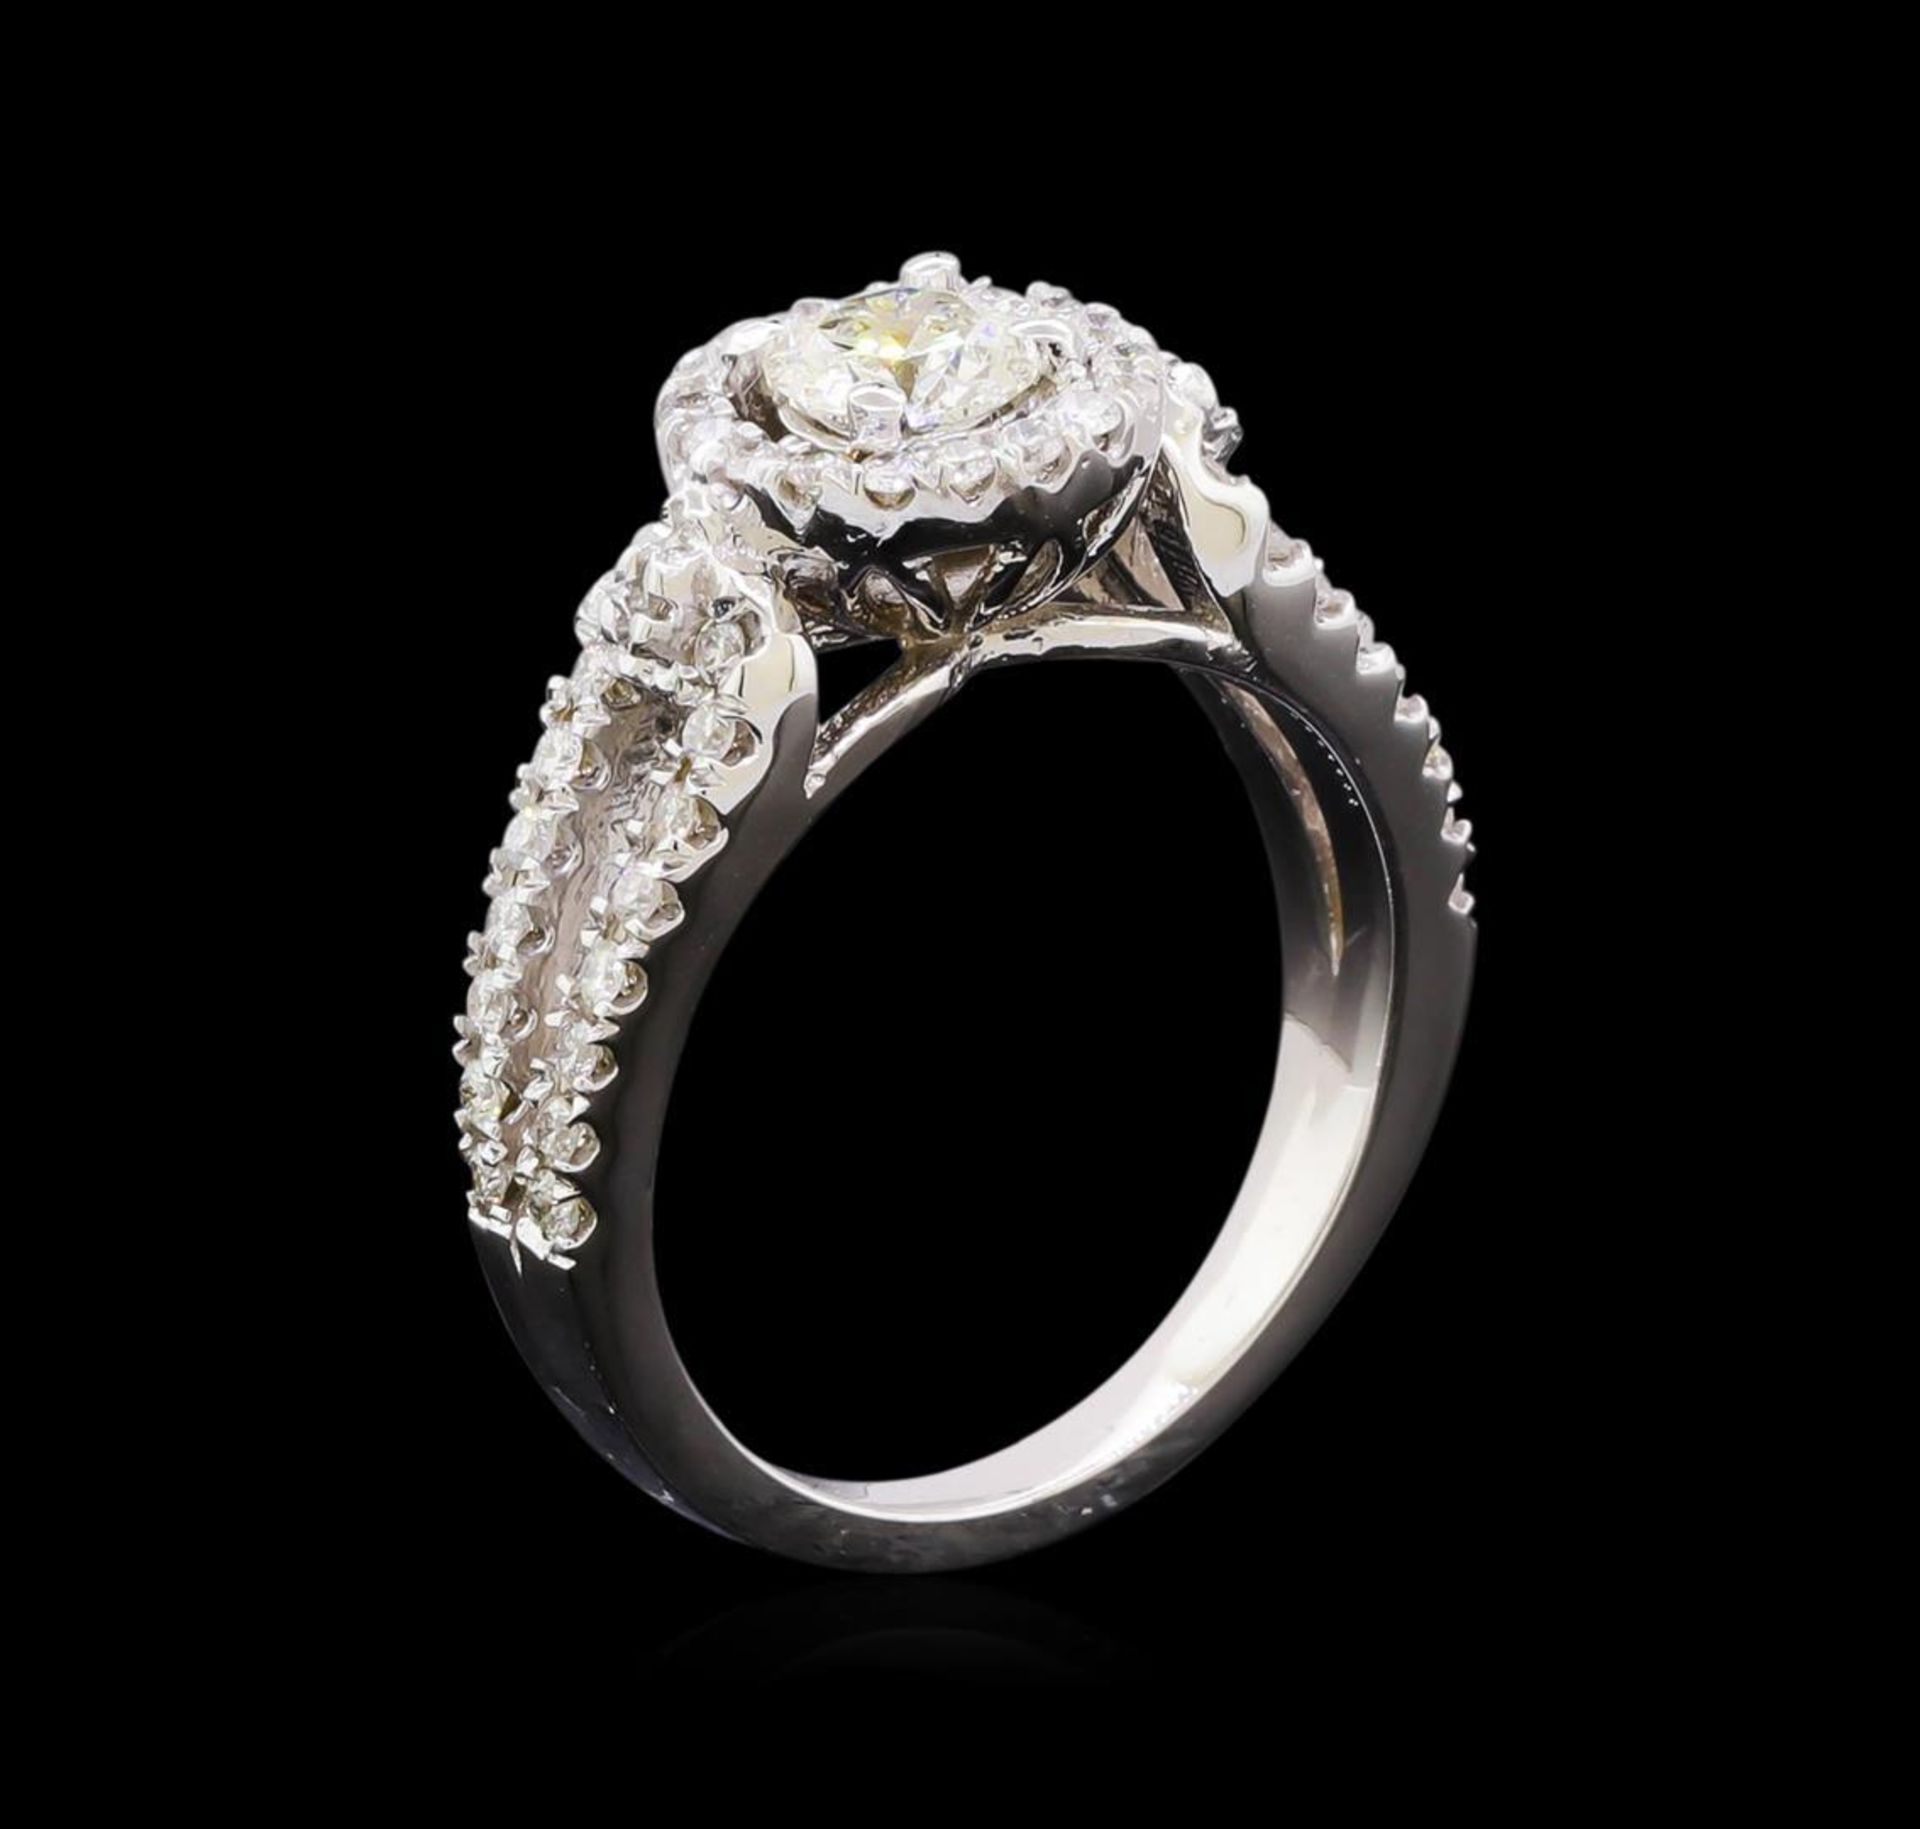 1.04 ctw Diamond Ring - 14KT White Gold - Image 4 of 5